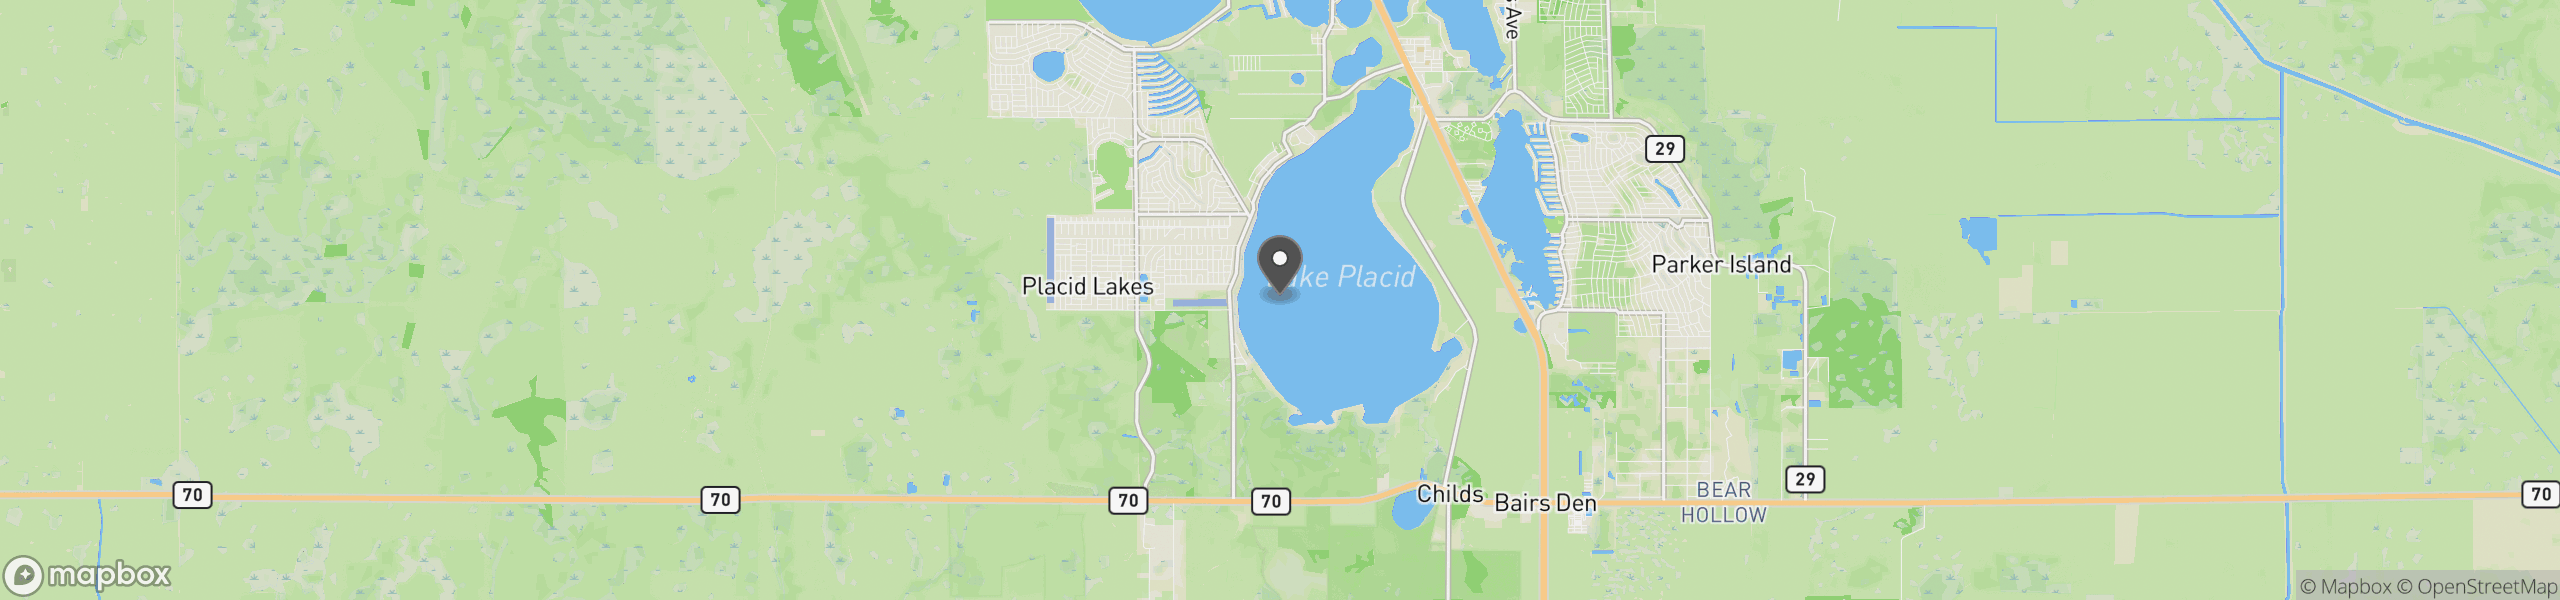 Lake Placid, FL